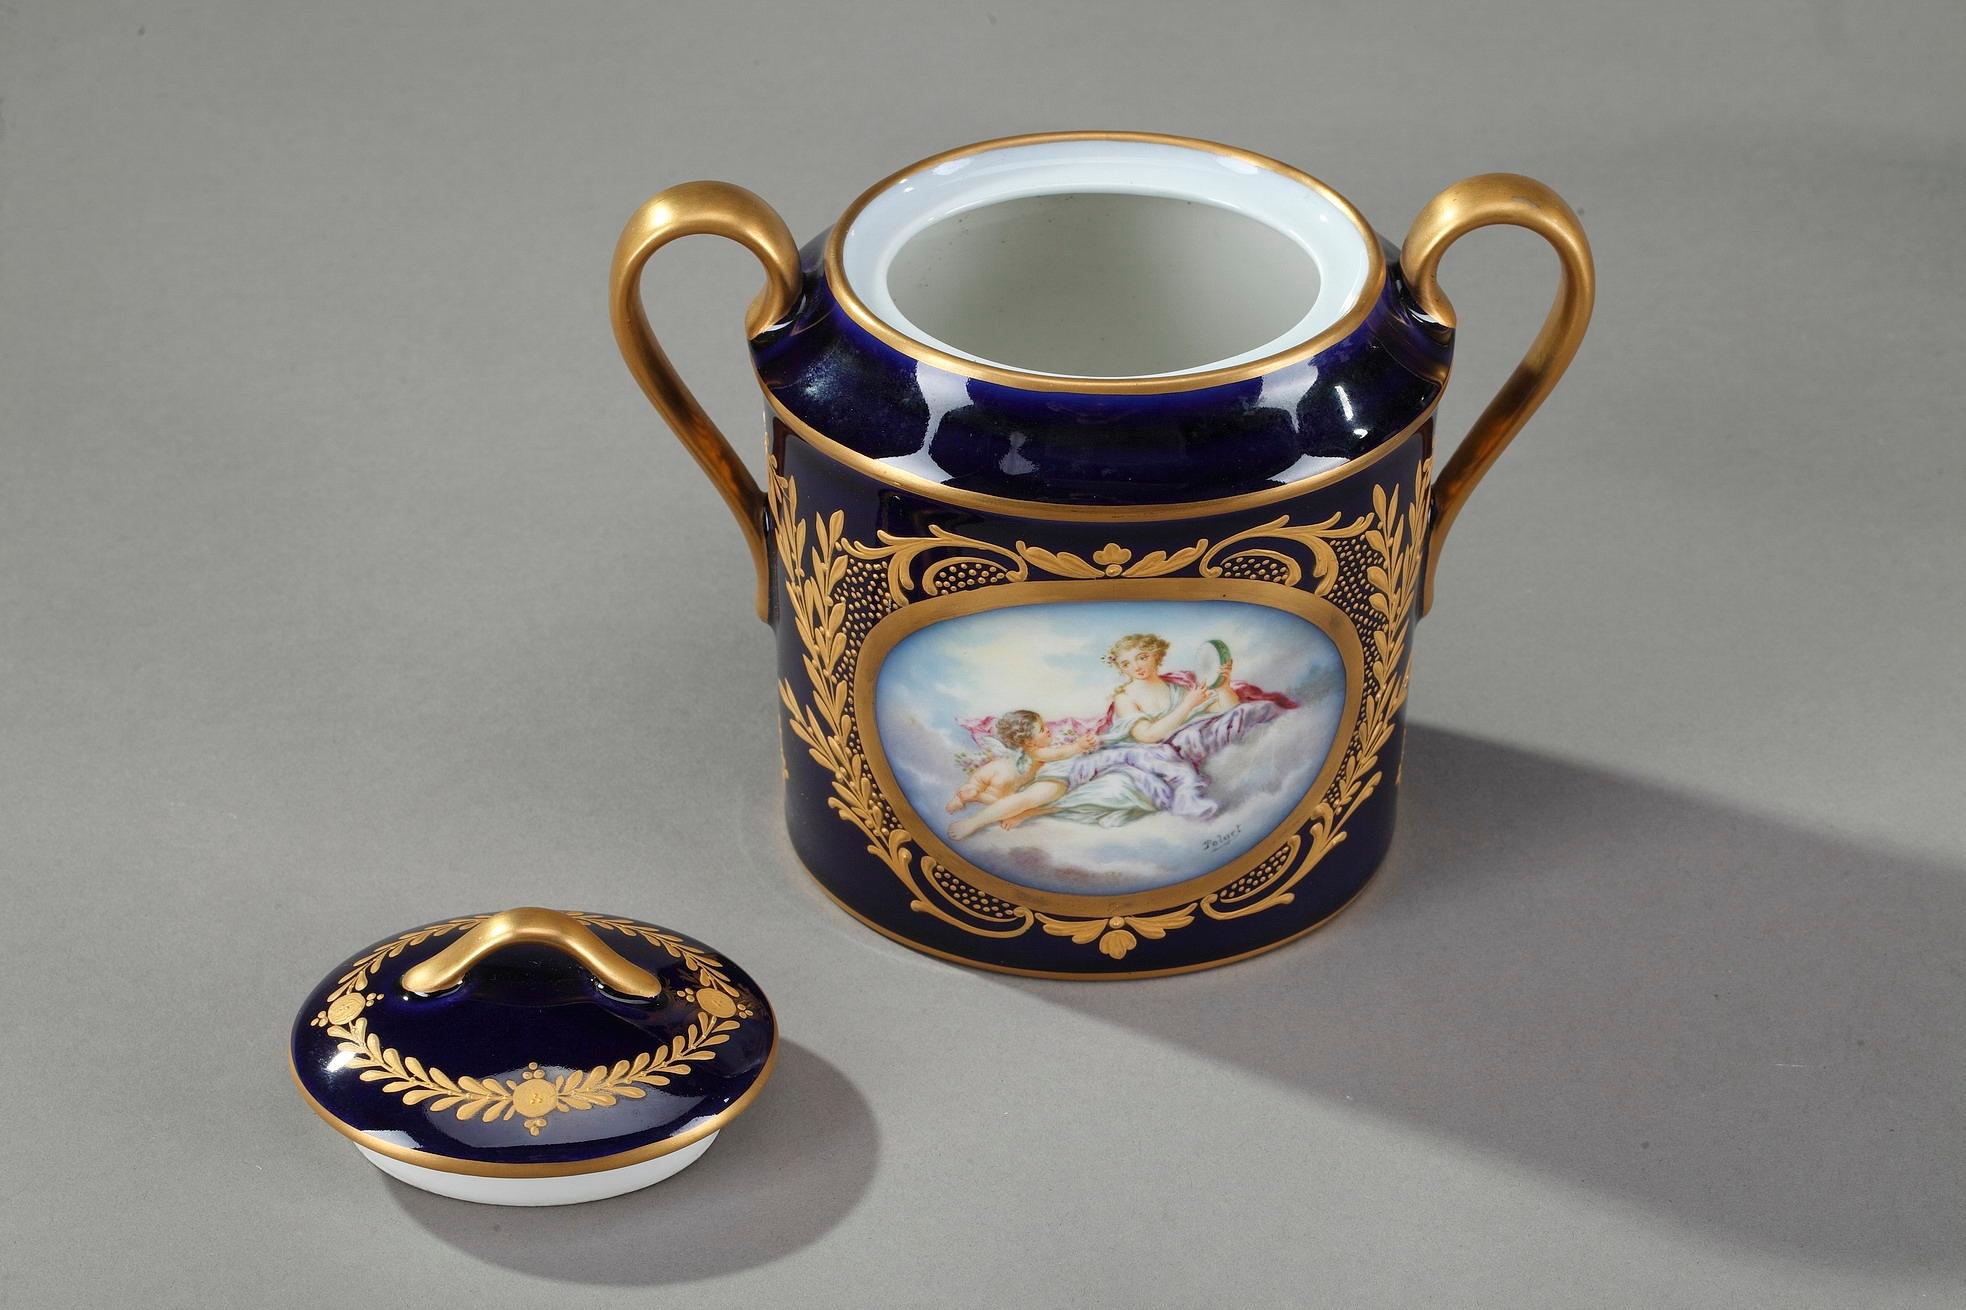 Porcelain Coffee Service with Mythological Scenes in Sevres Taste 9